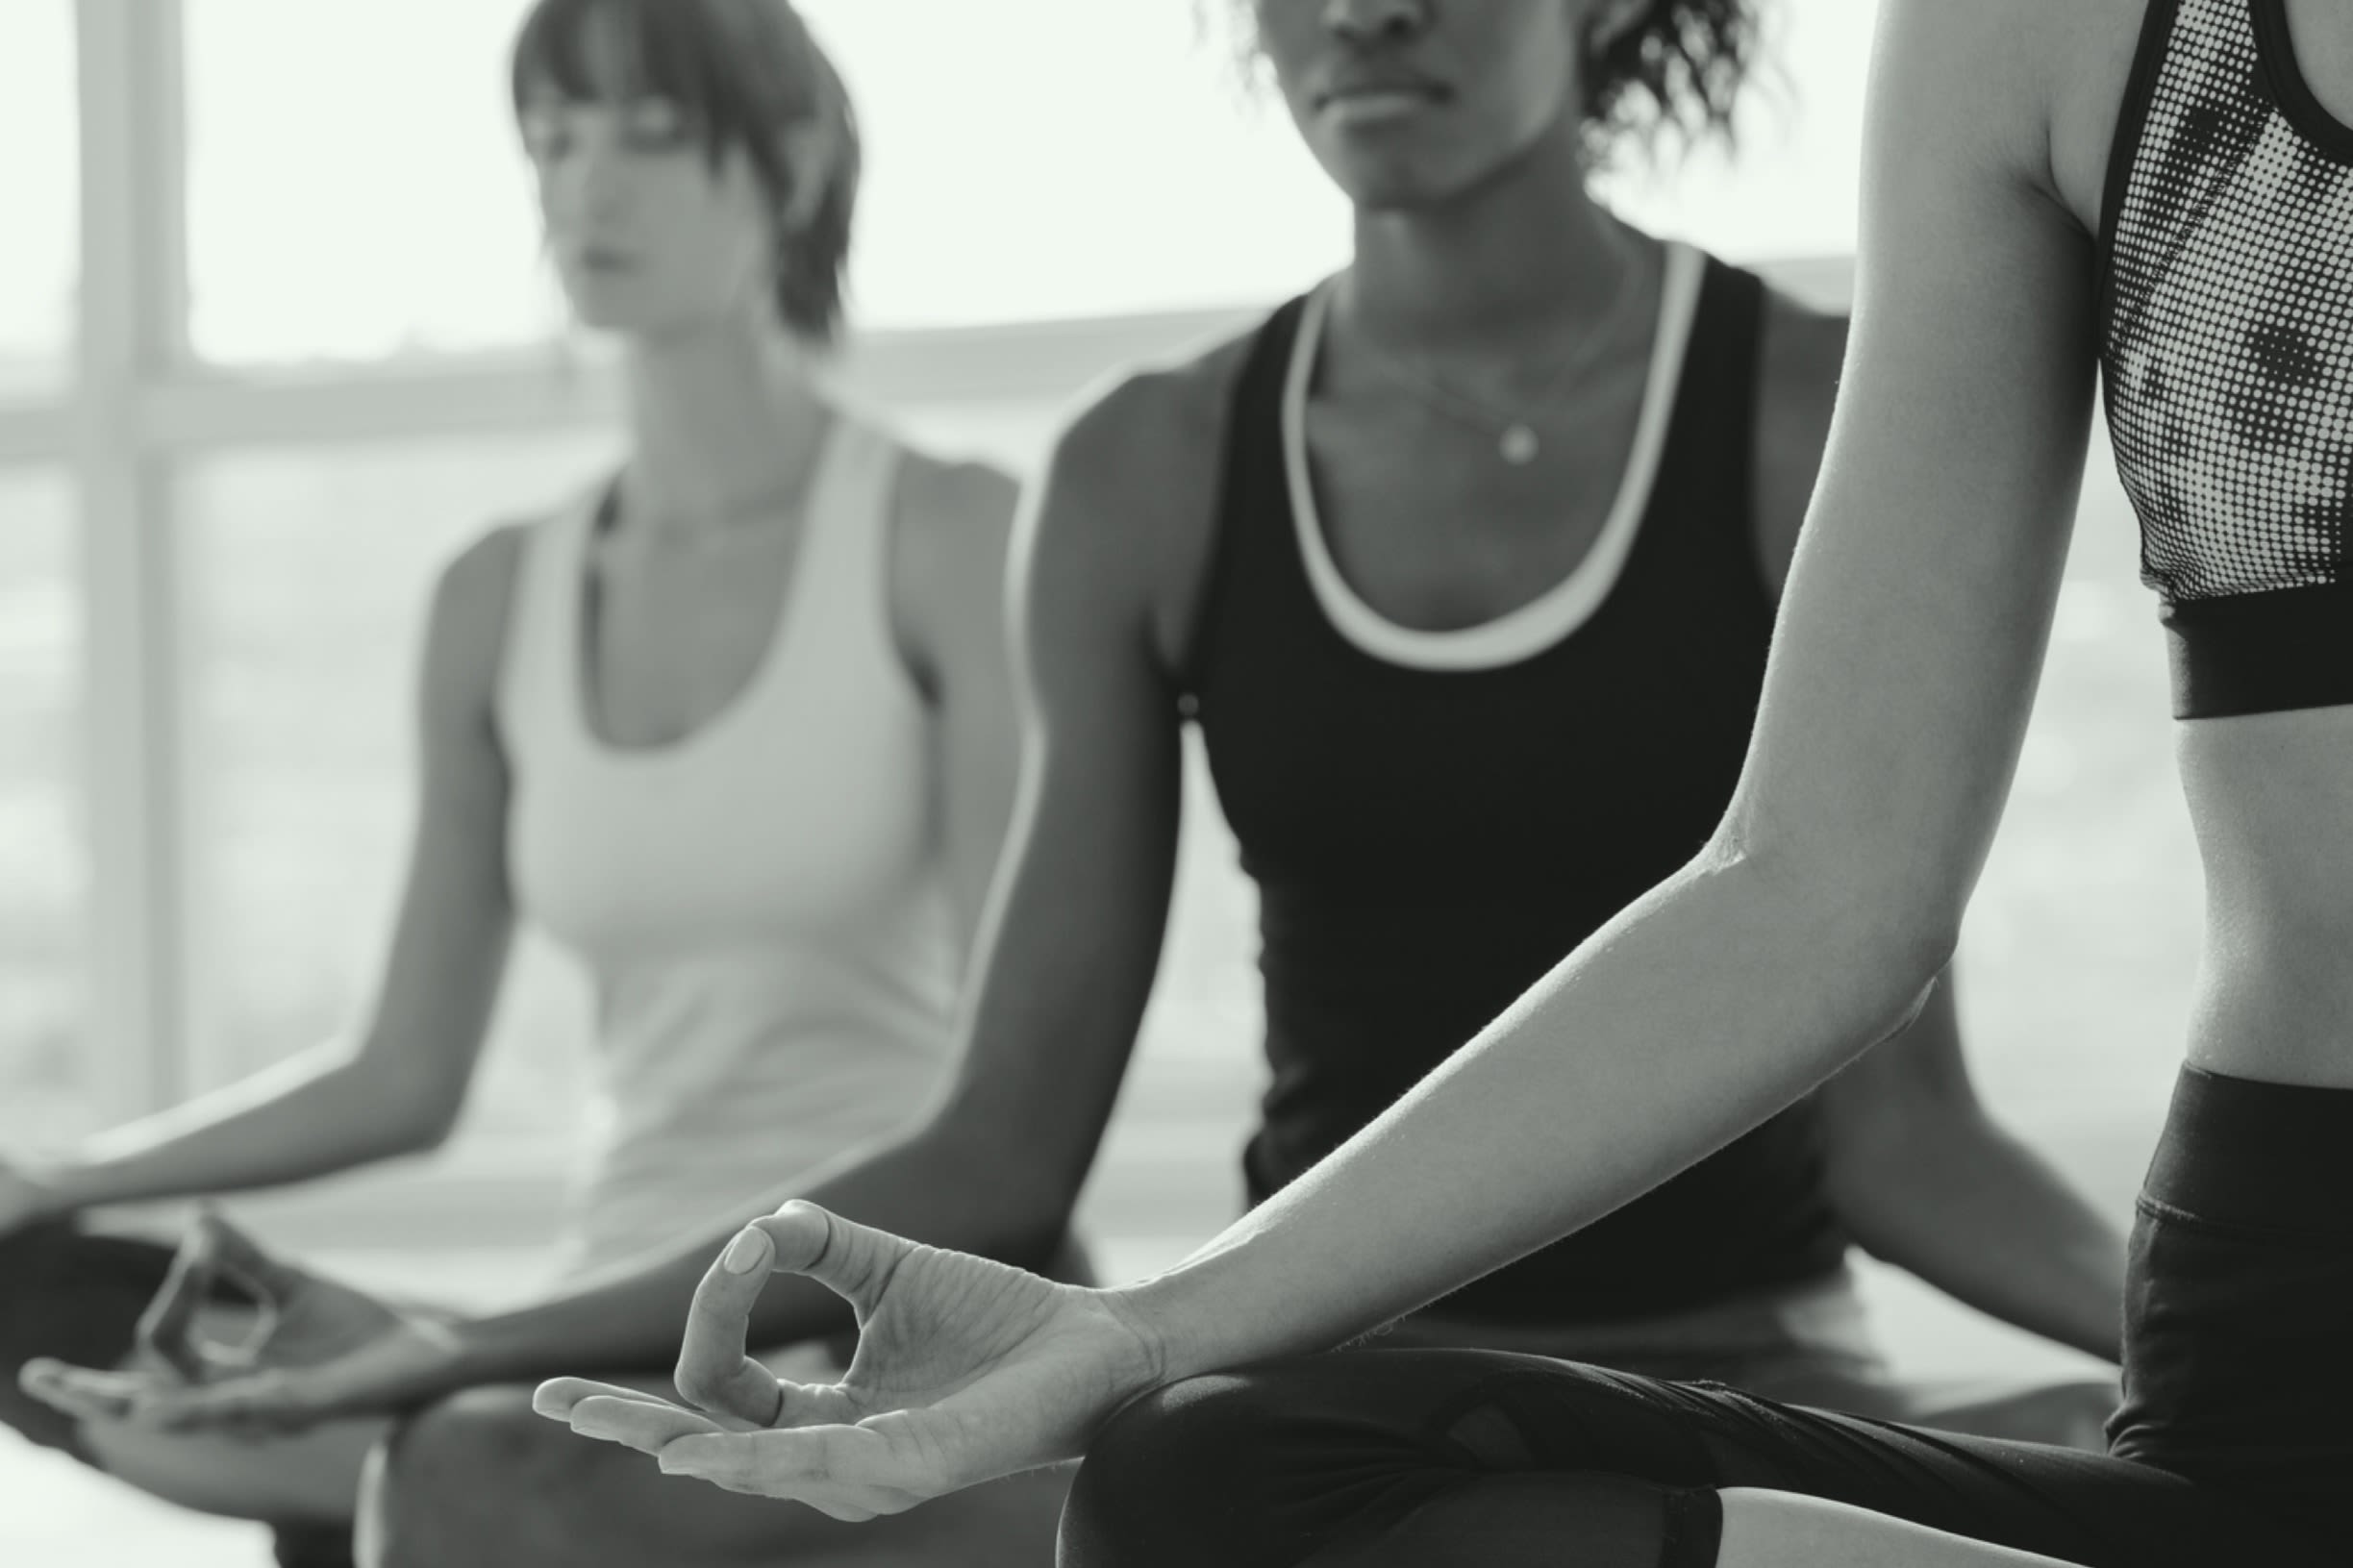 Zen Yoga: Read Reviews and Book Classes on ClassPass